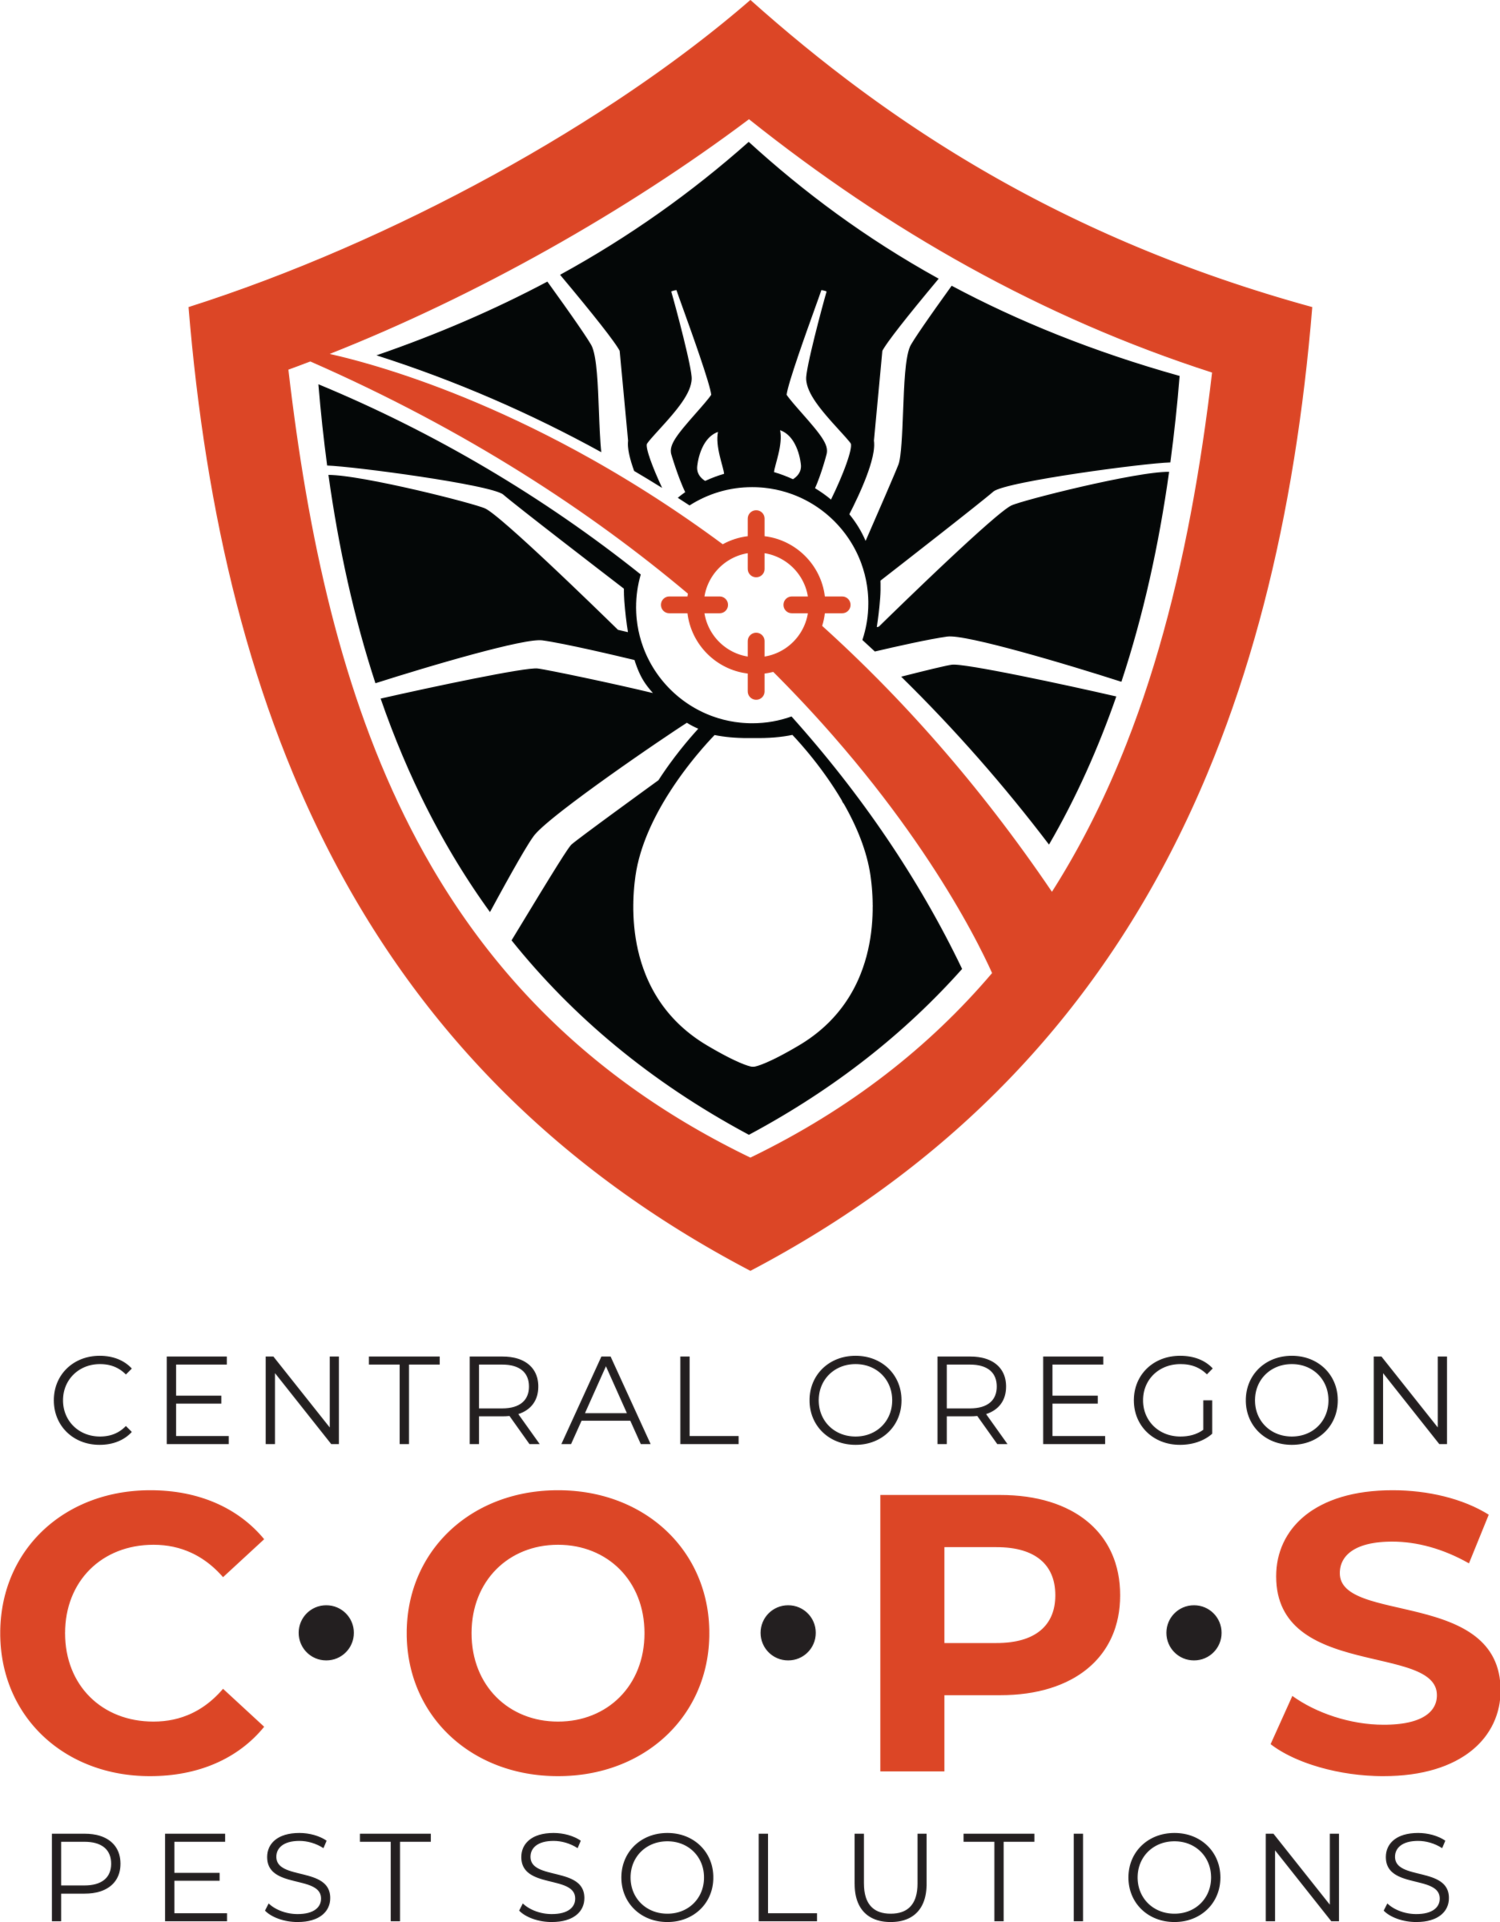 Central Oregon Pest Solutions